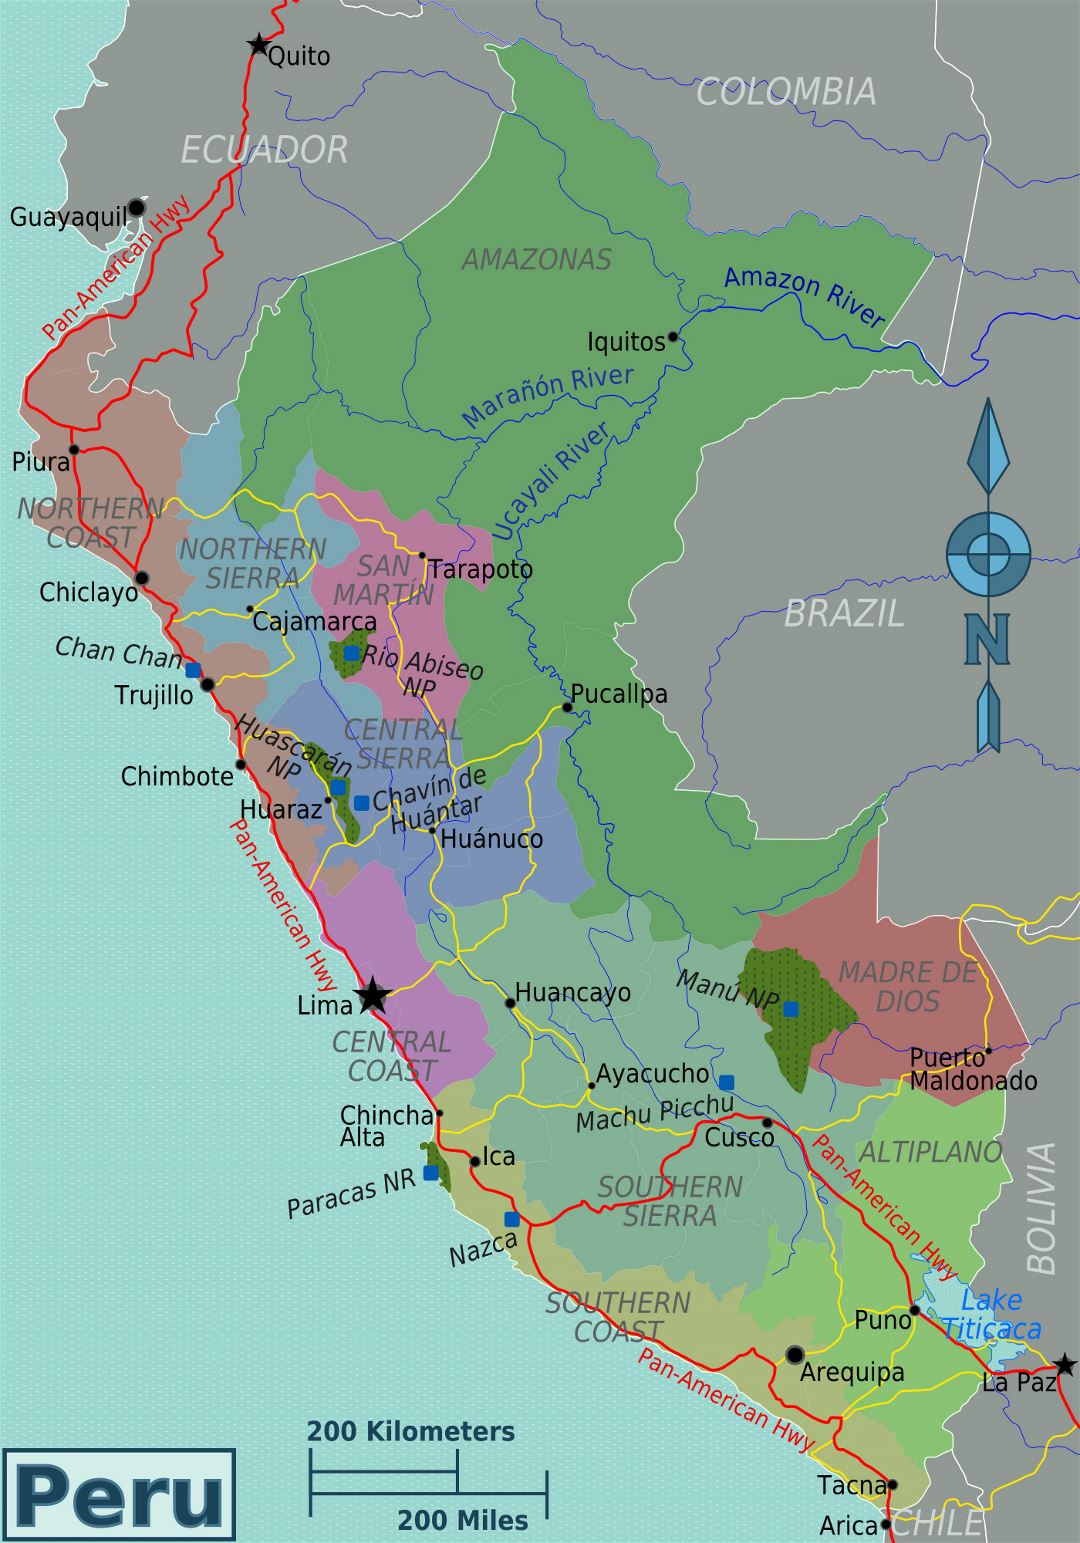 Large regions map of Peru